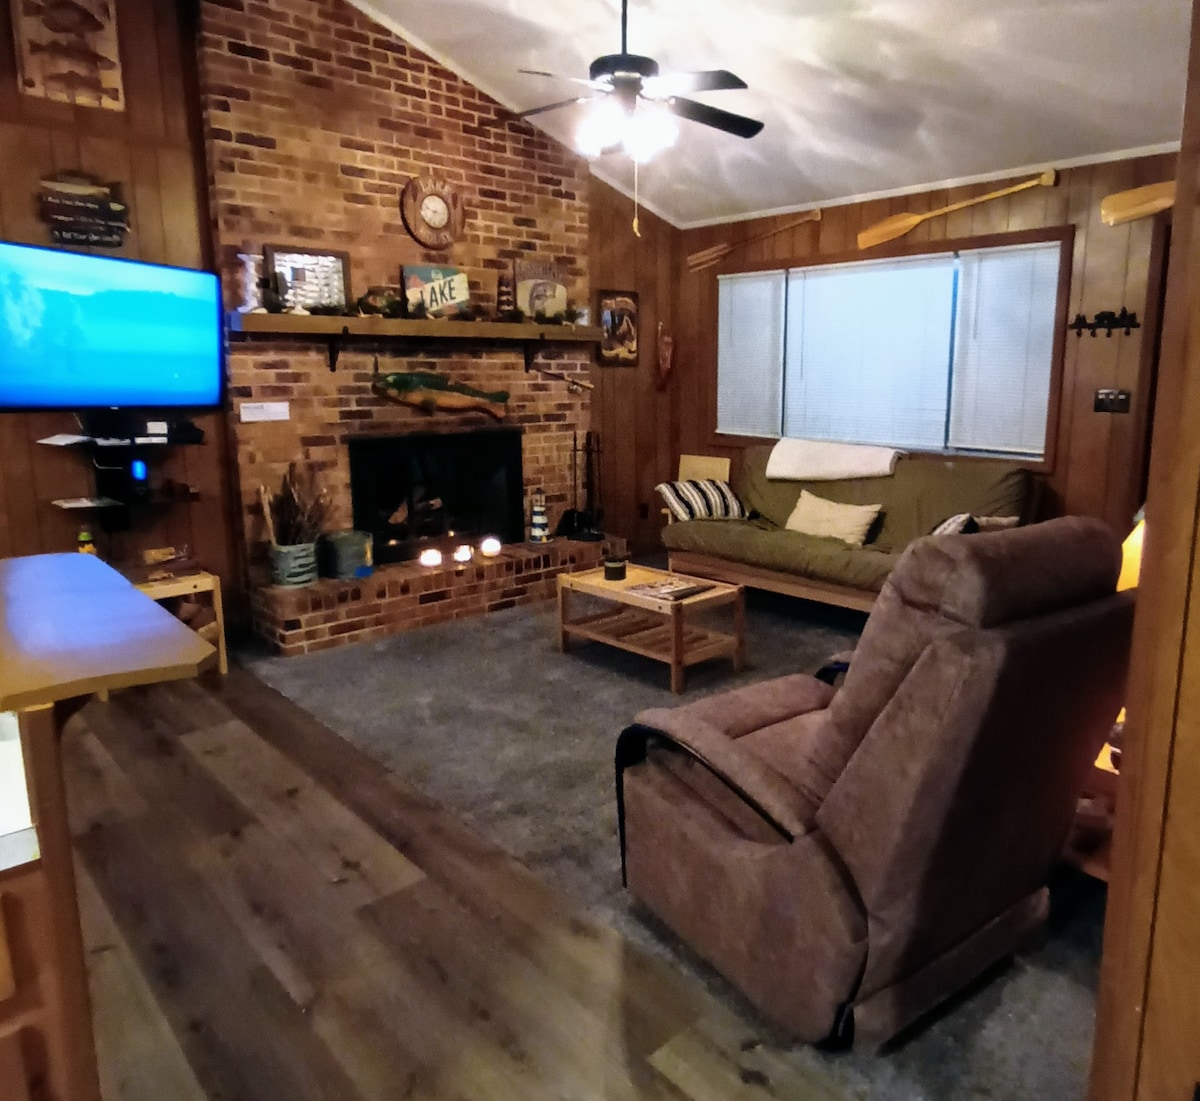 The Crappie: A Cozy Cabin